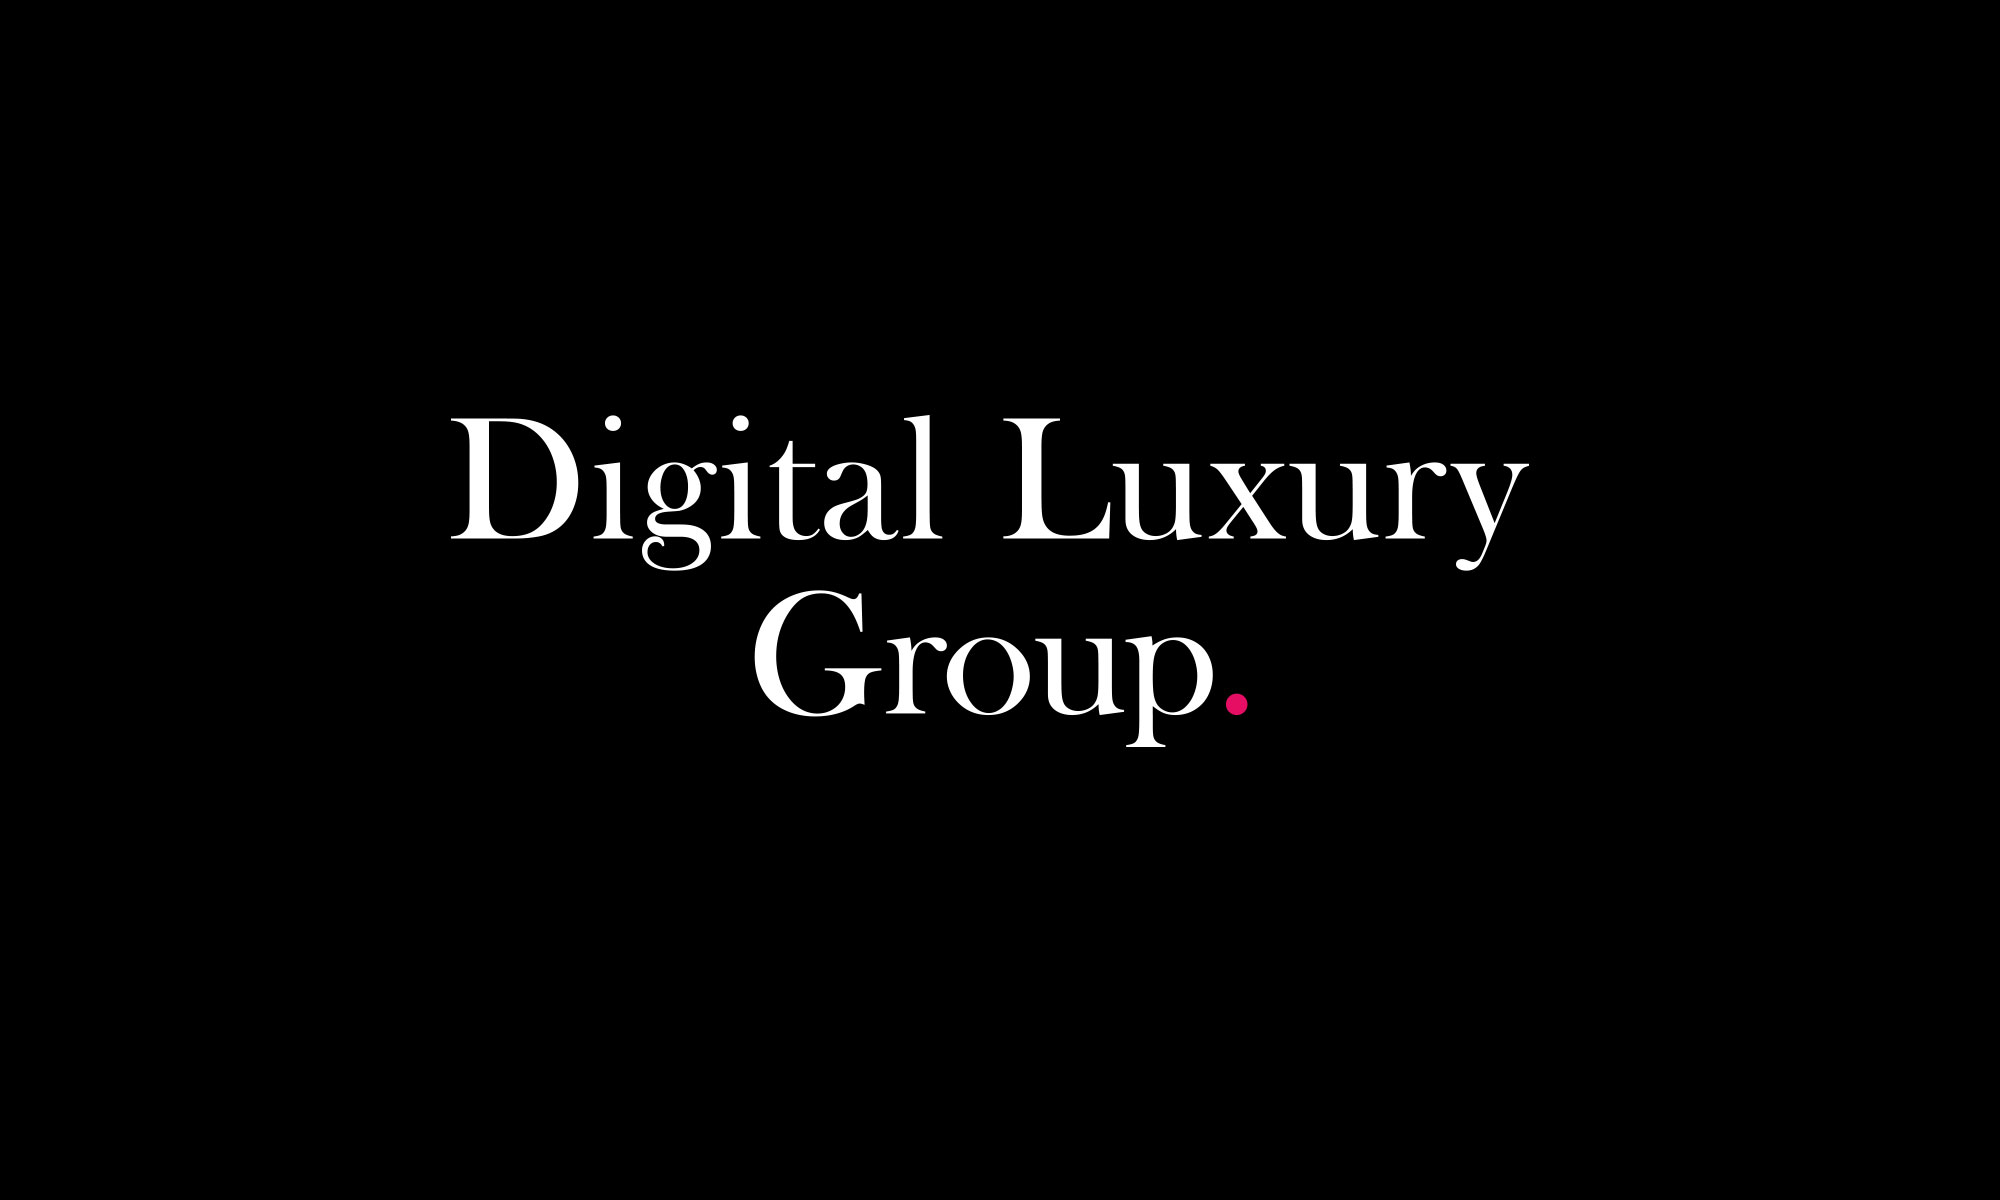 Digital Luxury Group logo